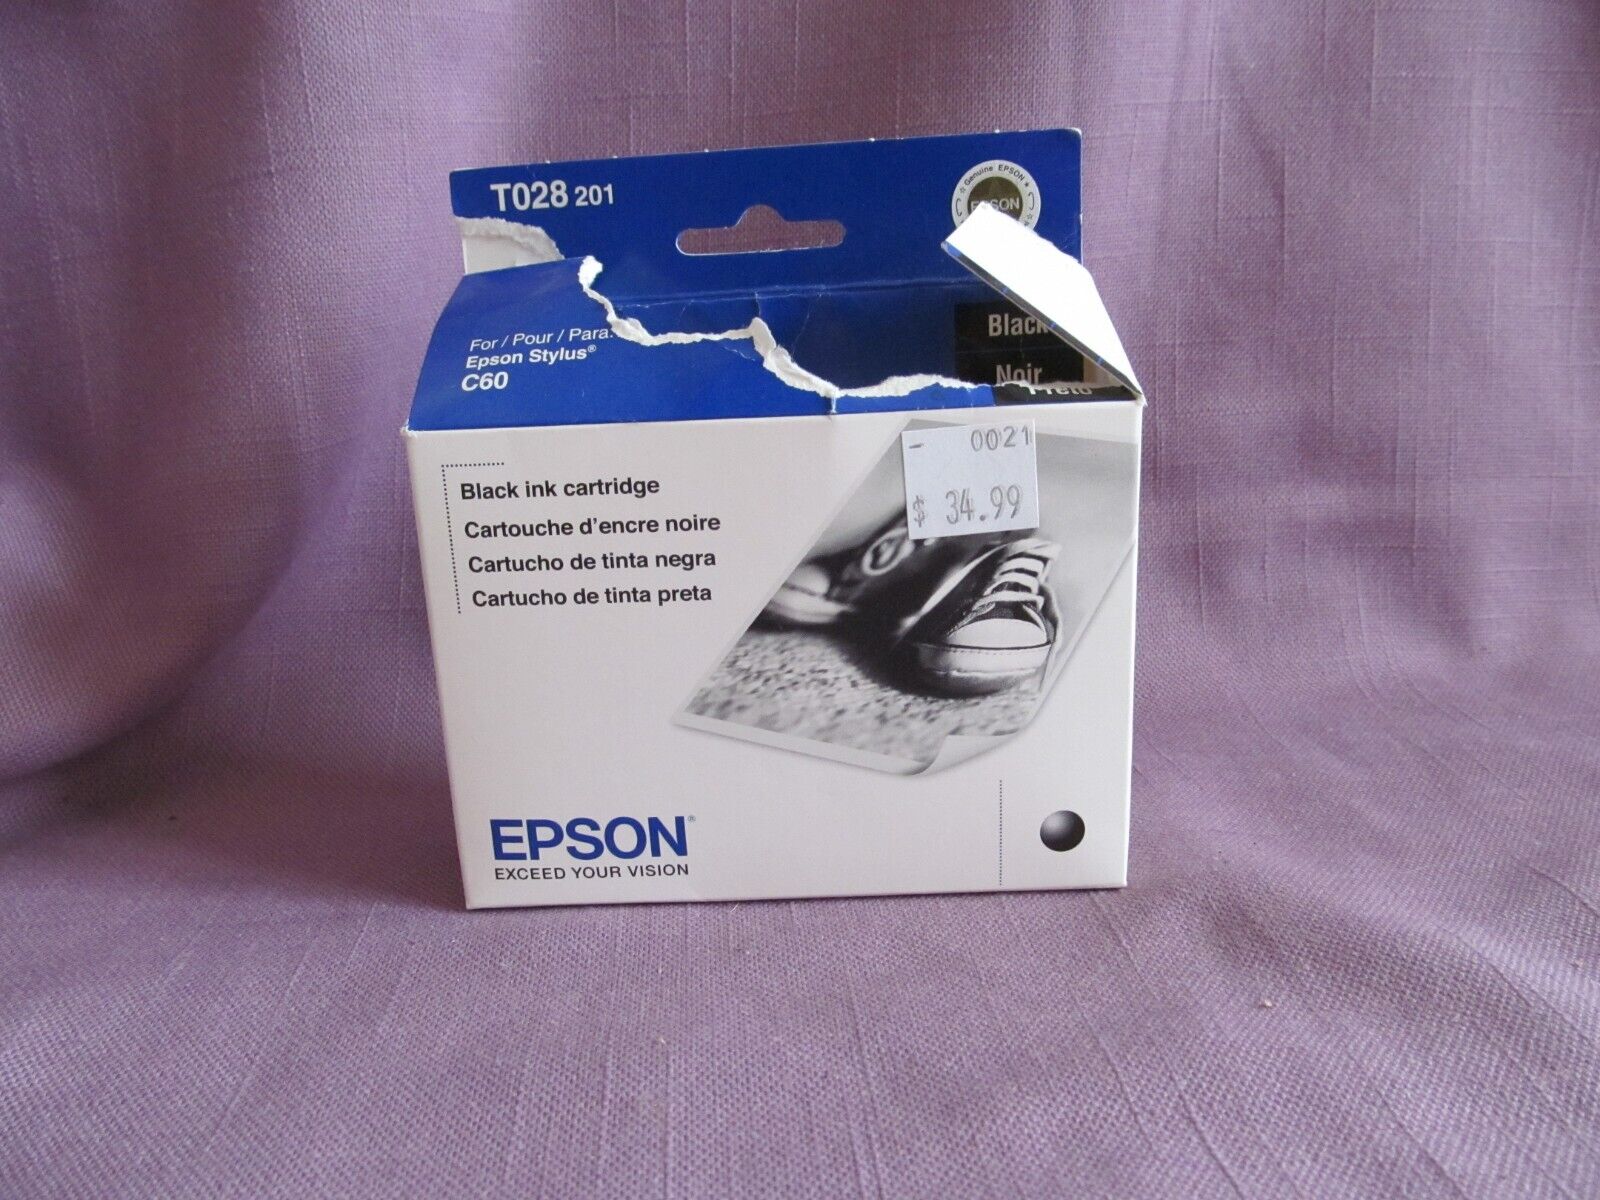 Epson Black INK Cartridge T028 201 Exp. 05-2011